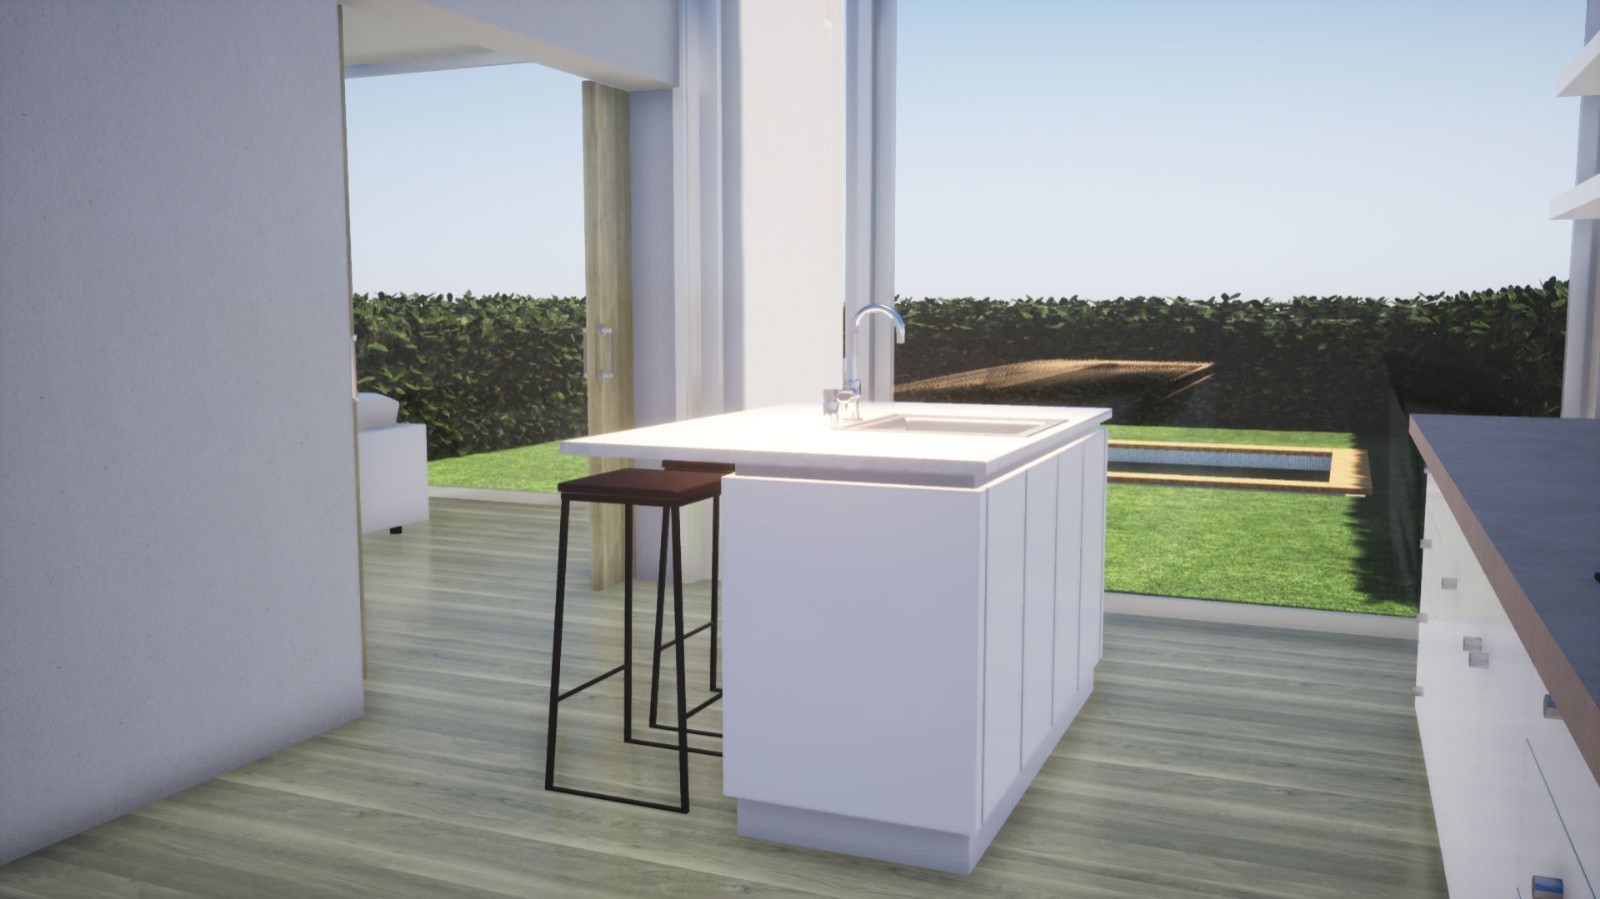 4 bedroom villa, new construction with seaview, for sale in Tavira, Algarve_227988